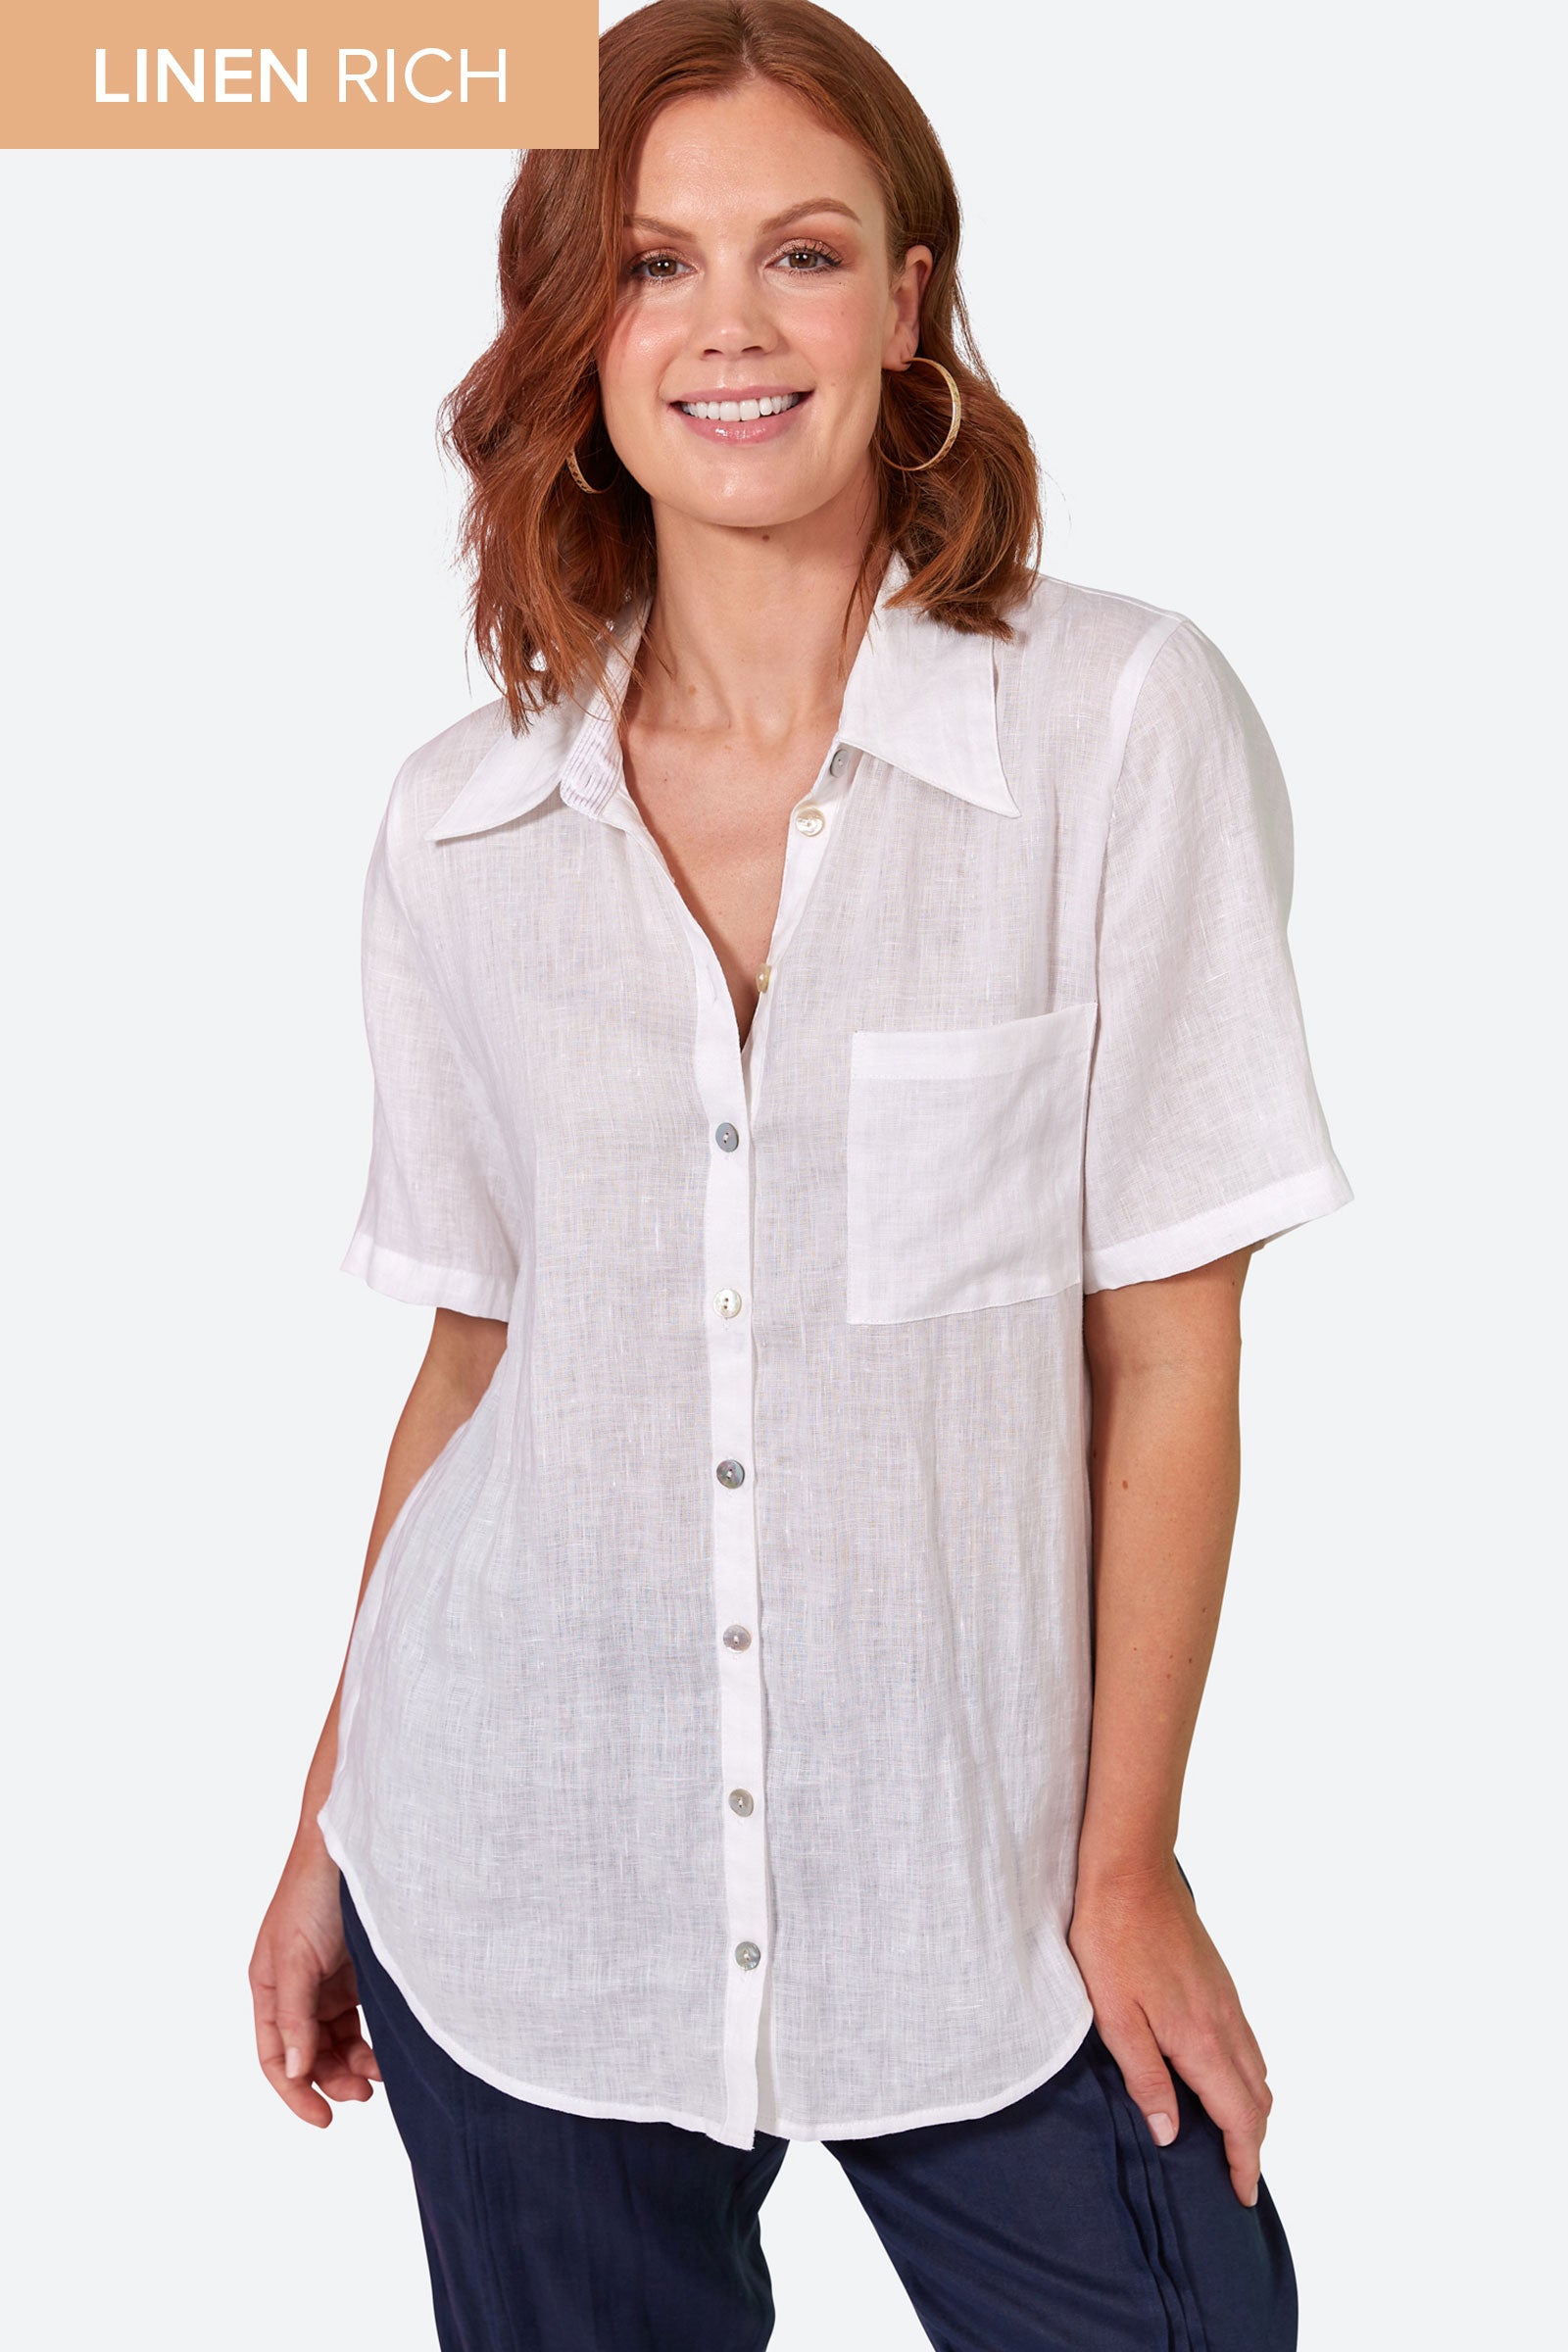 La Vie Shirt - Blanc - eb&ive Clothing - Shirt S/S Linen